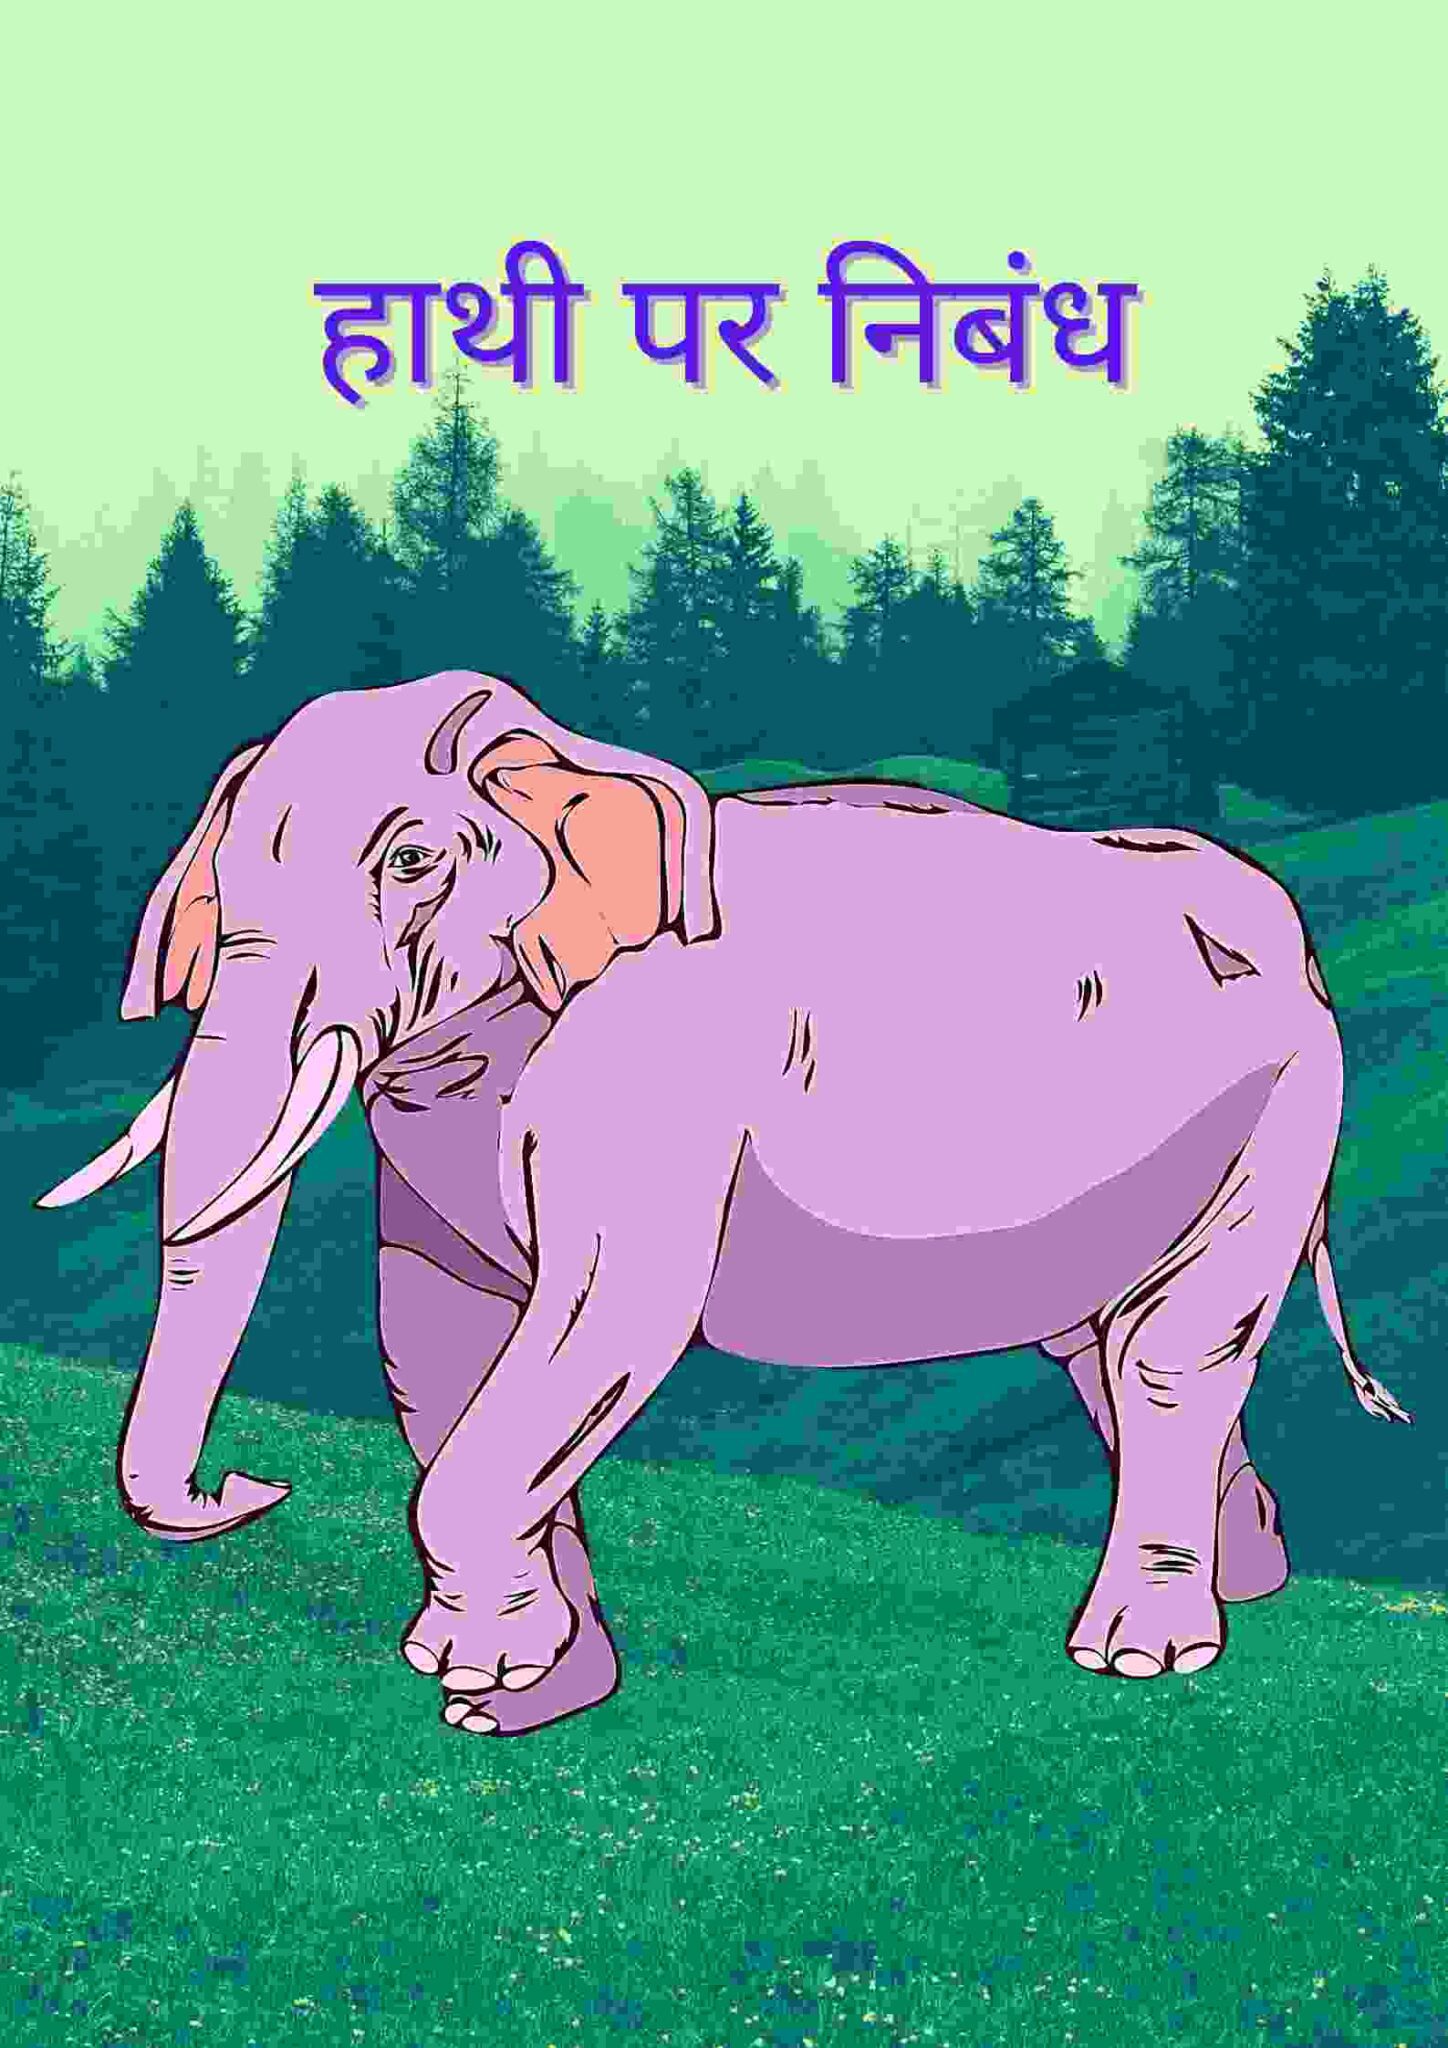 essay on elephant in hindi